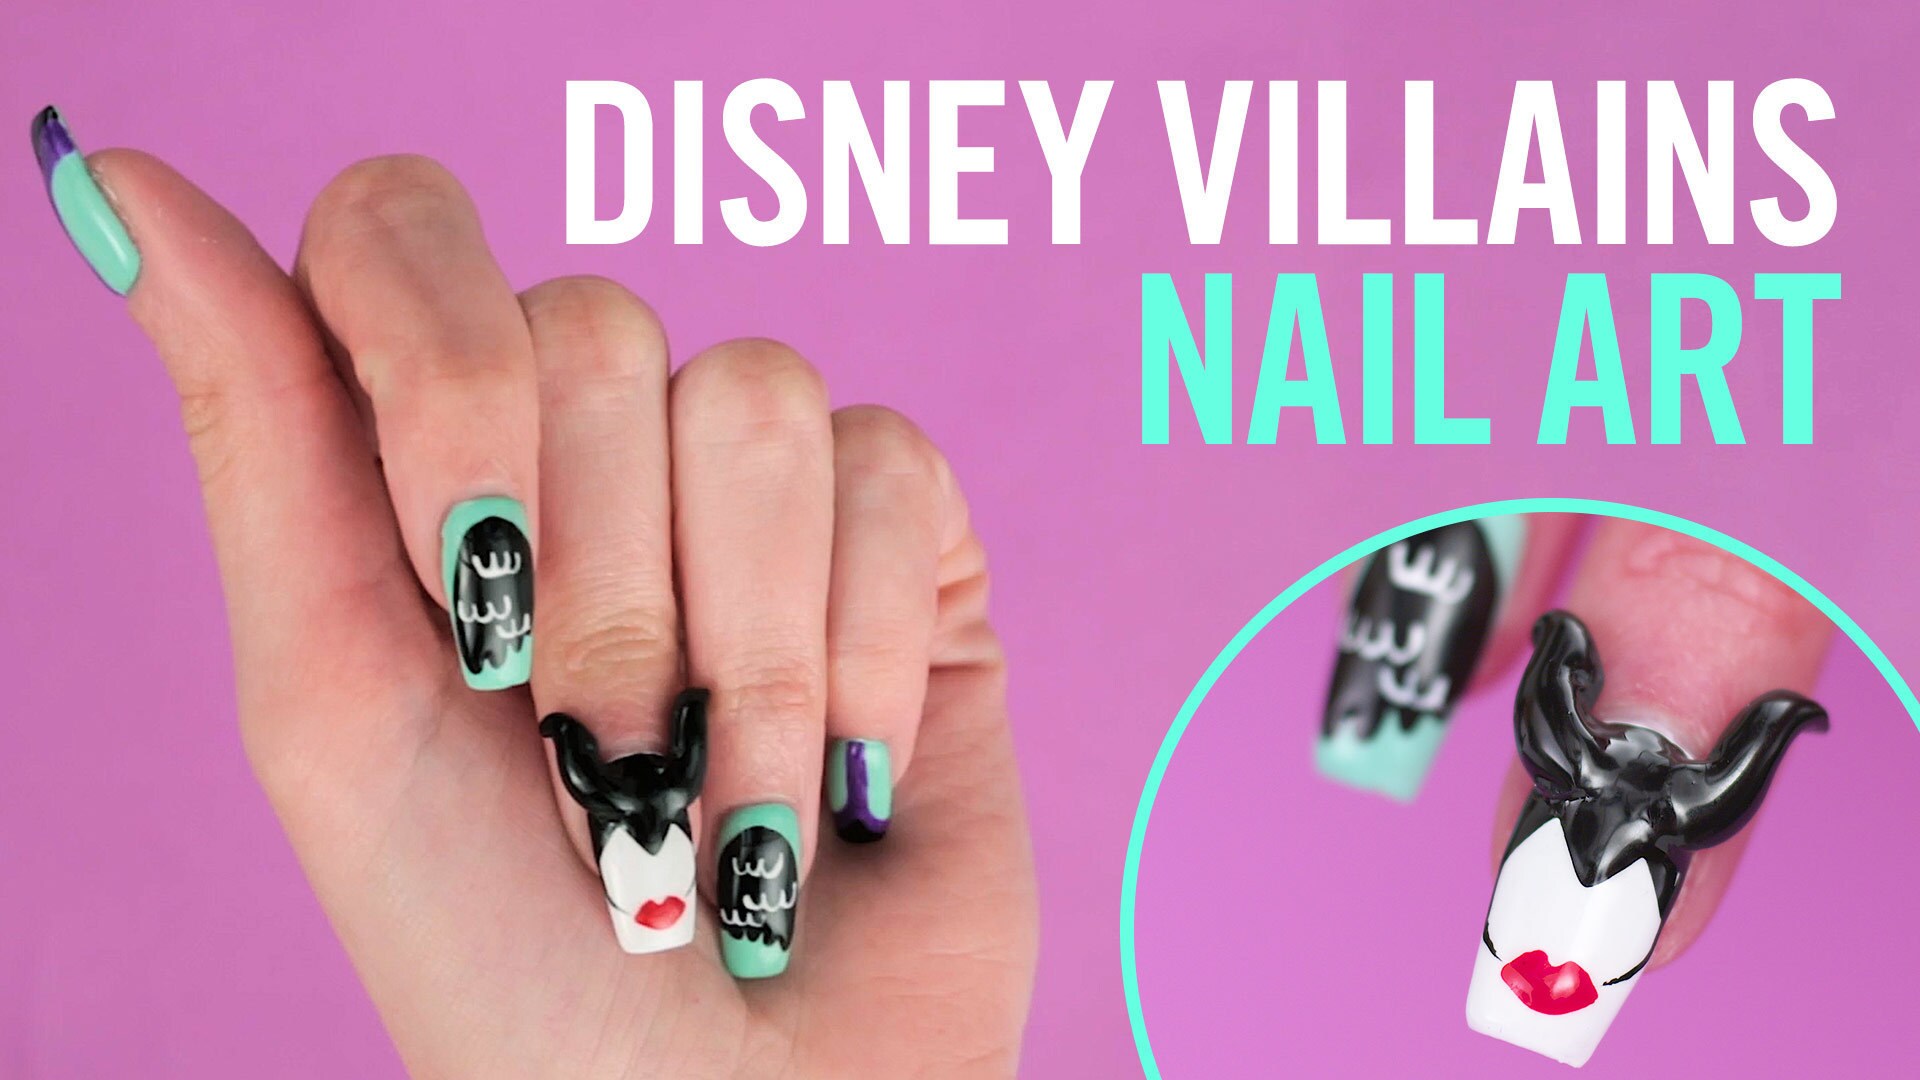 Disney Villains Nail Art | TIPS by Disney Style